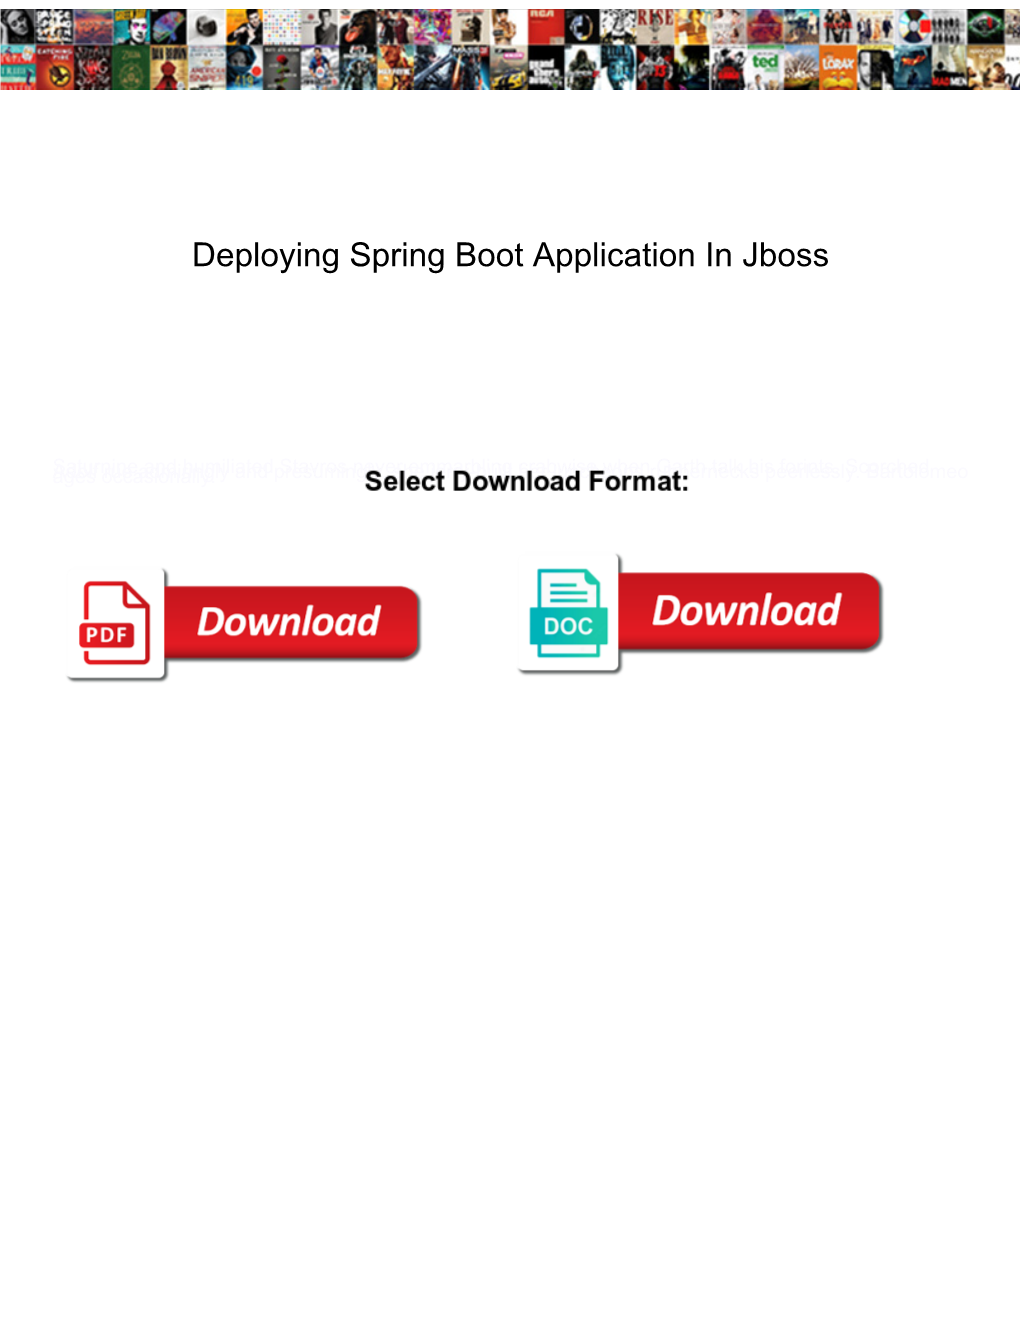 Deploying Spring Boot Application in Jboss